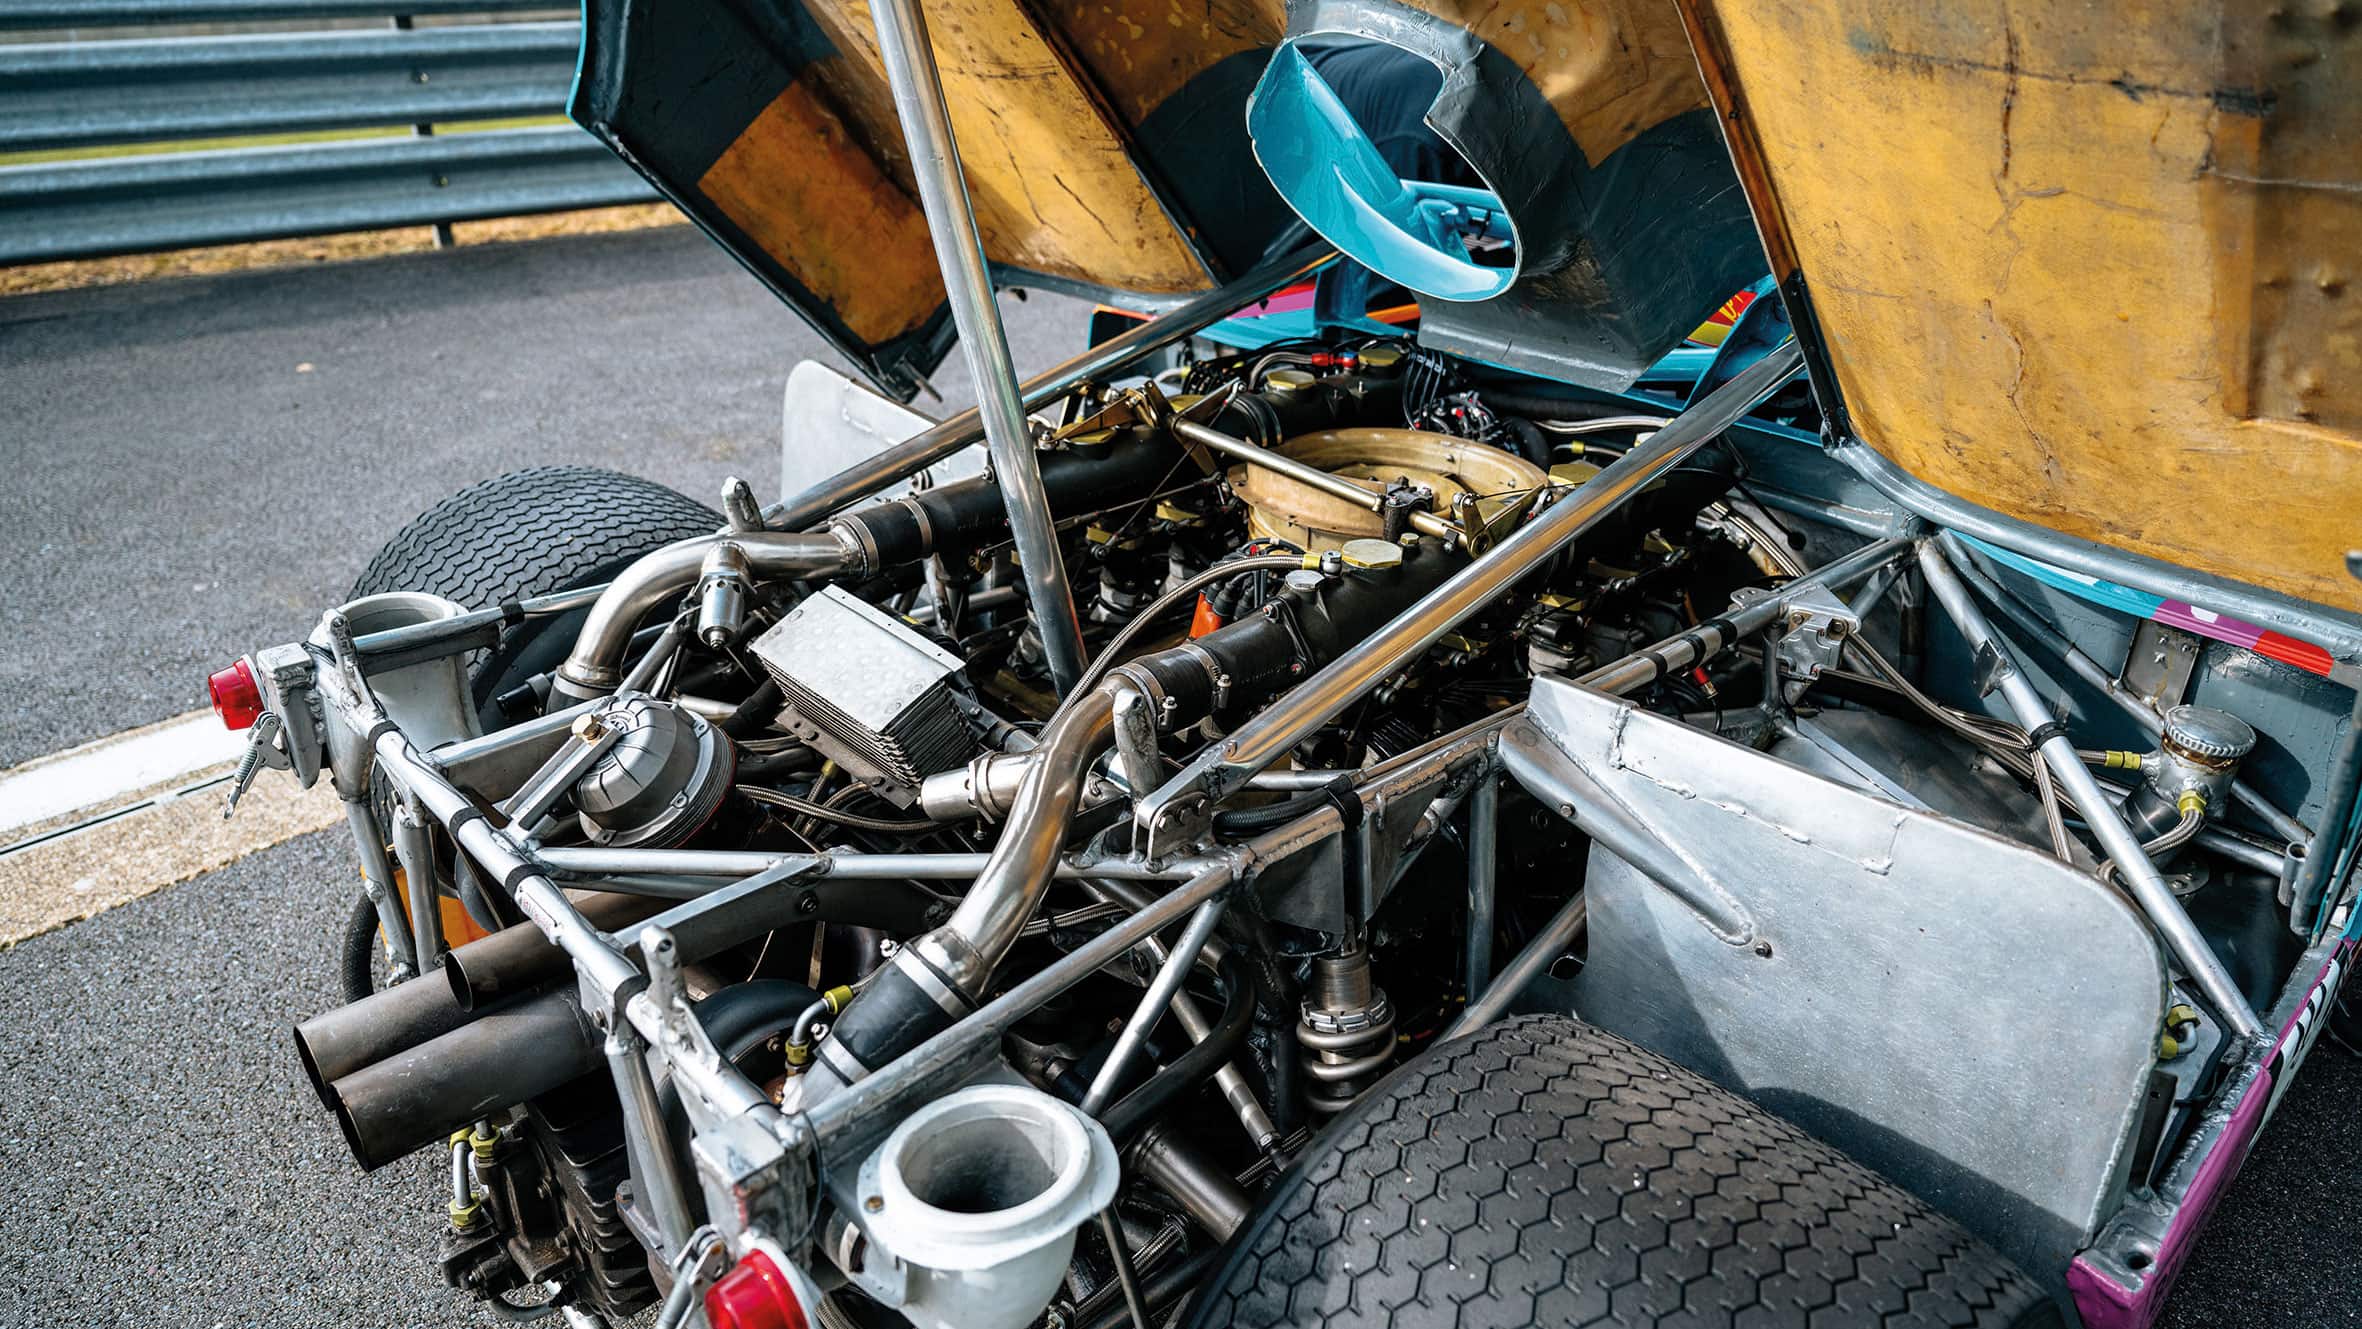 Porsche 917 engine Race car of the century